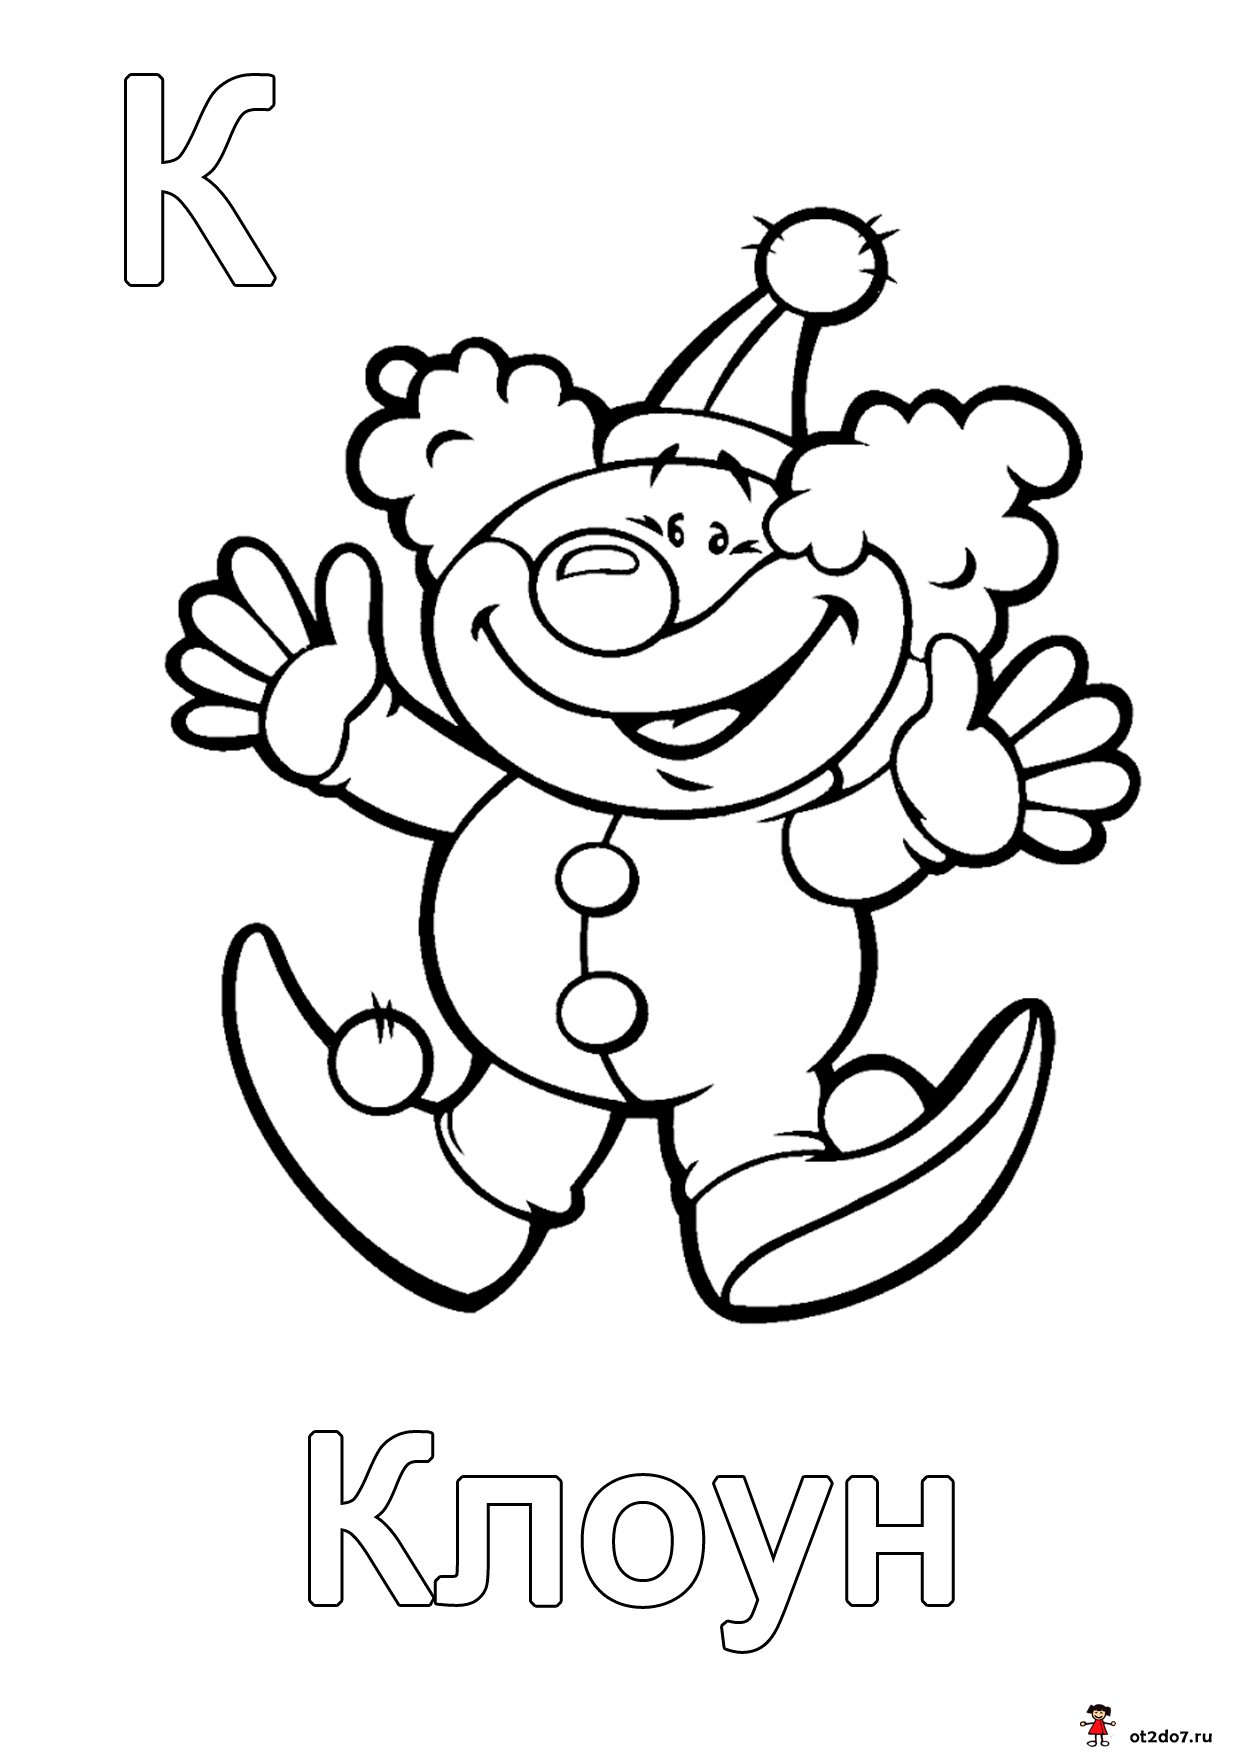 Клоун раскраска для детей 4 5. Клоун раскраска. Веселый клоун раскраска. Клоун раскраска для детей. Раскраска весёлый клоун для детей.